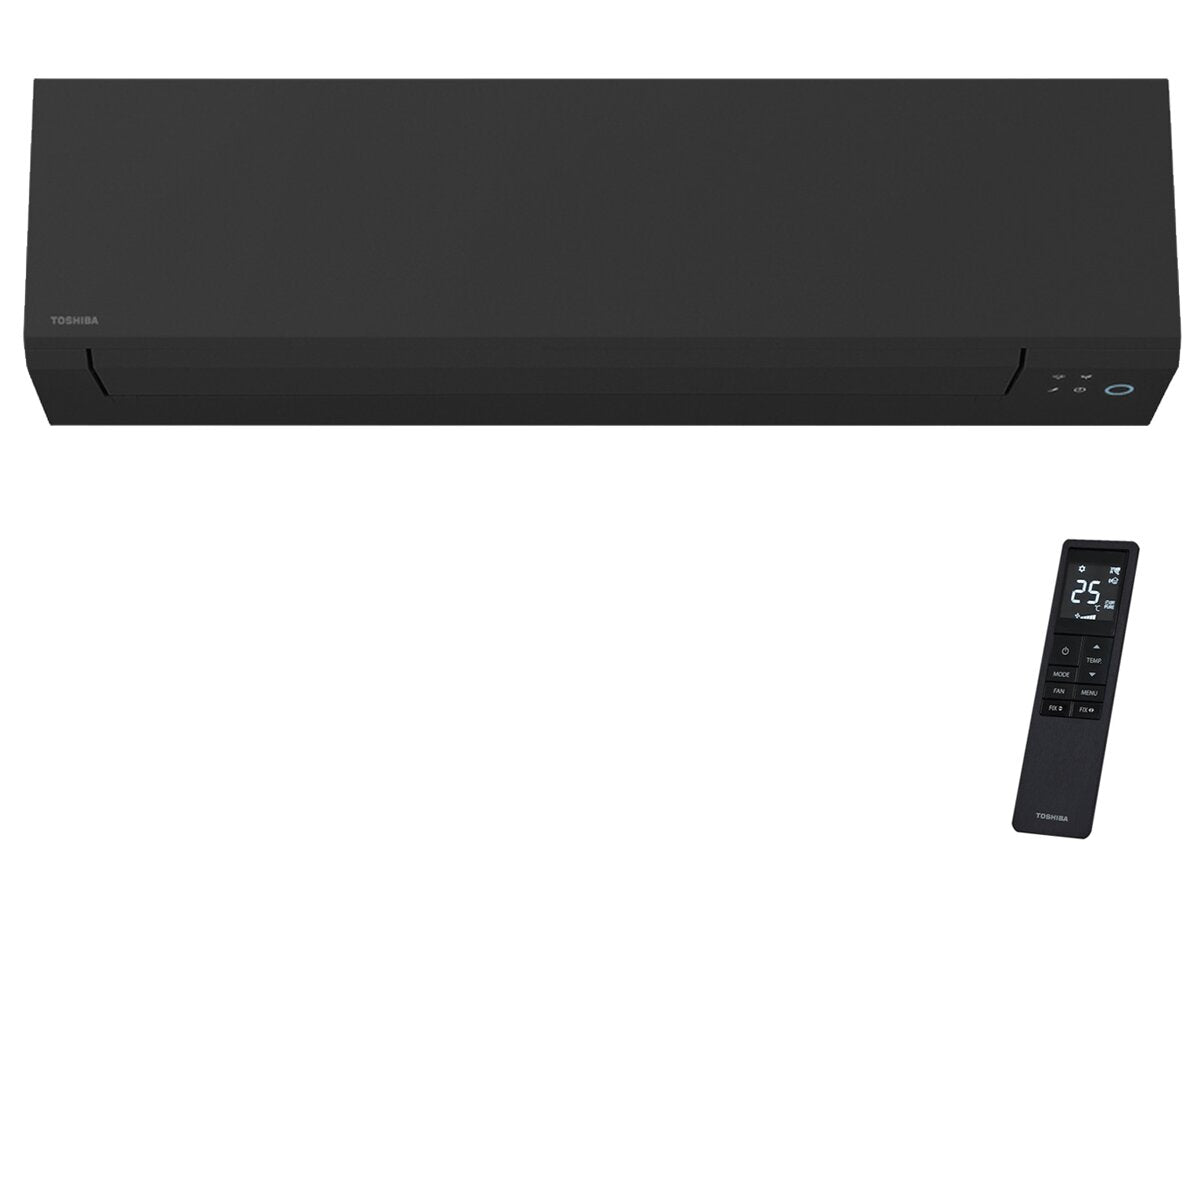 Toshiba SHORAI Edge Black dual split air conditioner 5000+7000 BTU inverter A++ wifi external unit 4 kW